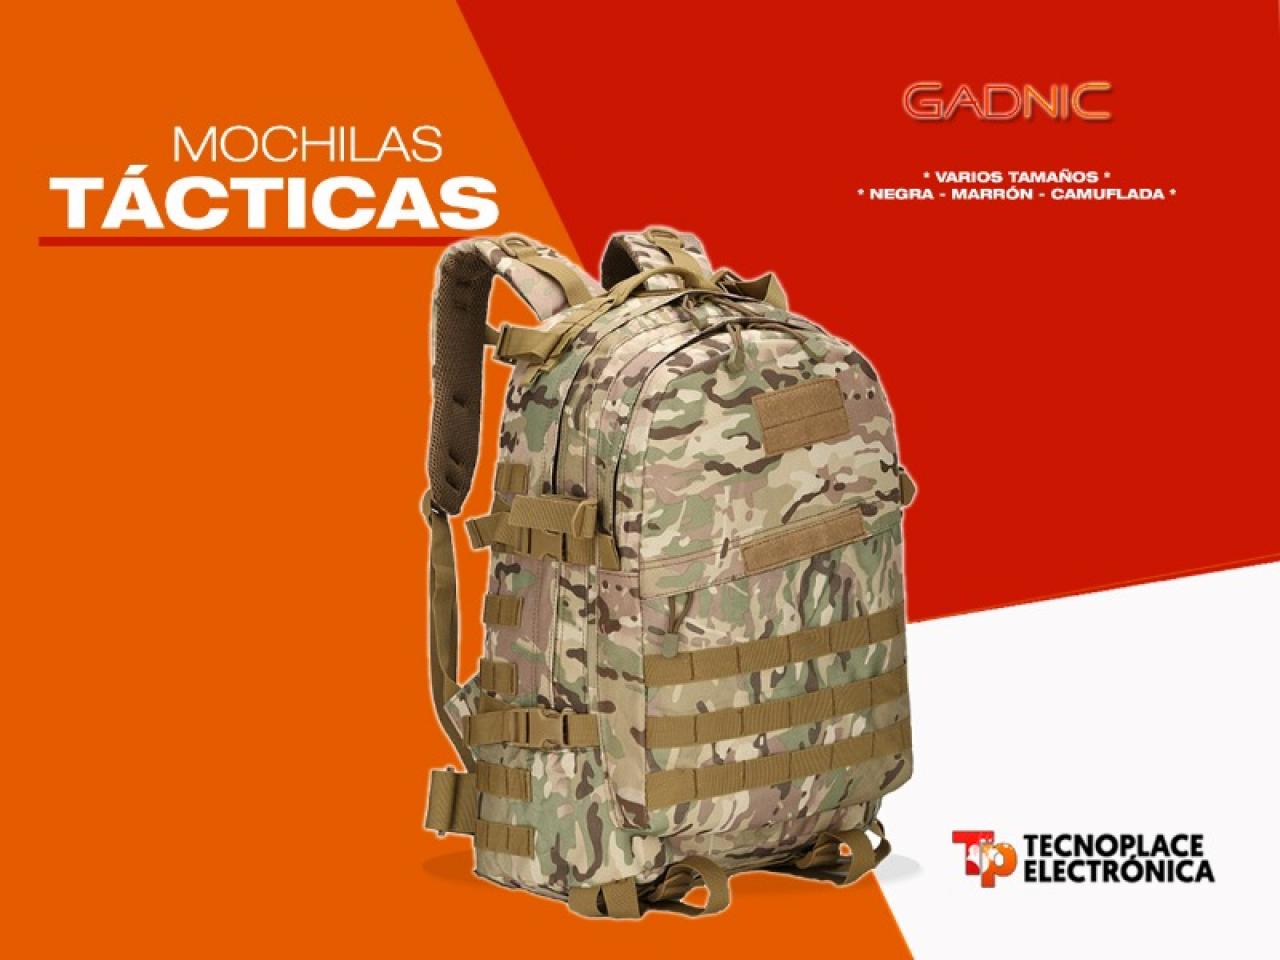 Mochila Táctica Gadnic 40Lts Militar Porta Notebook Compartimentos